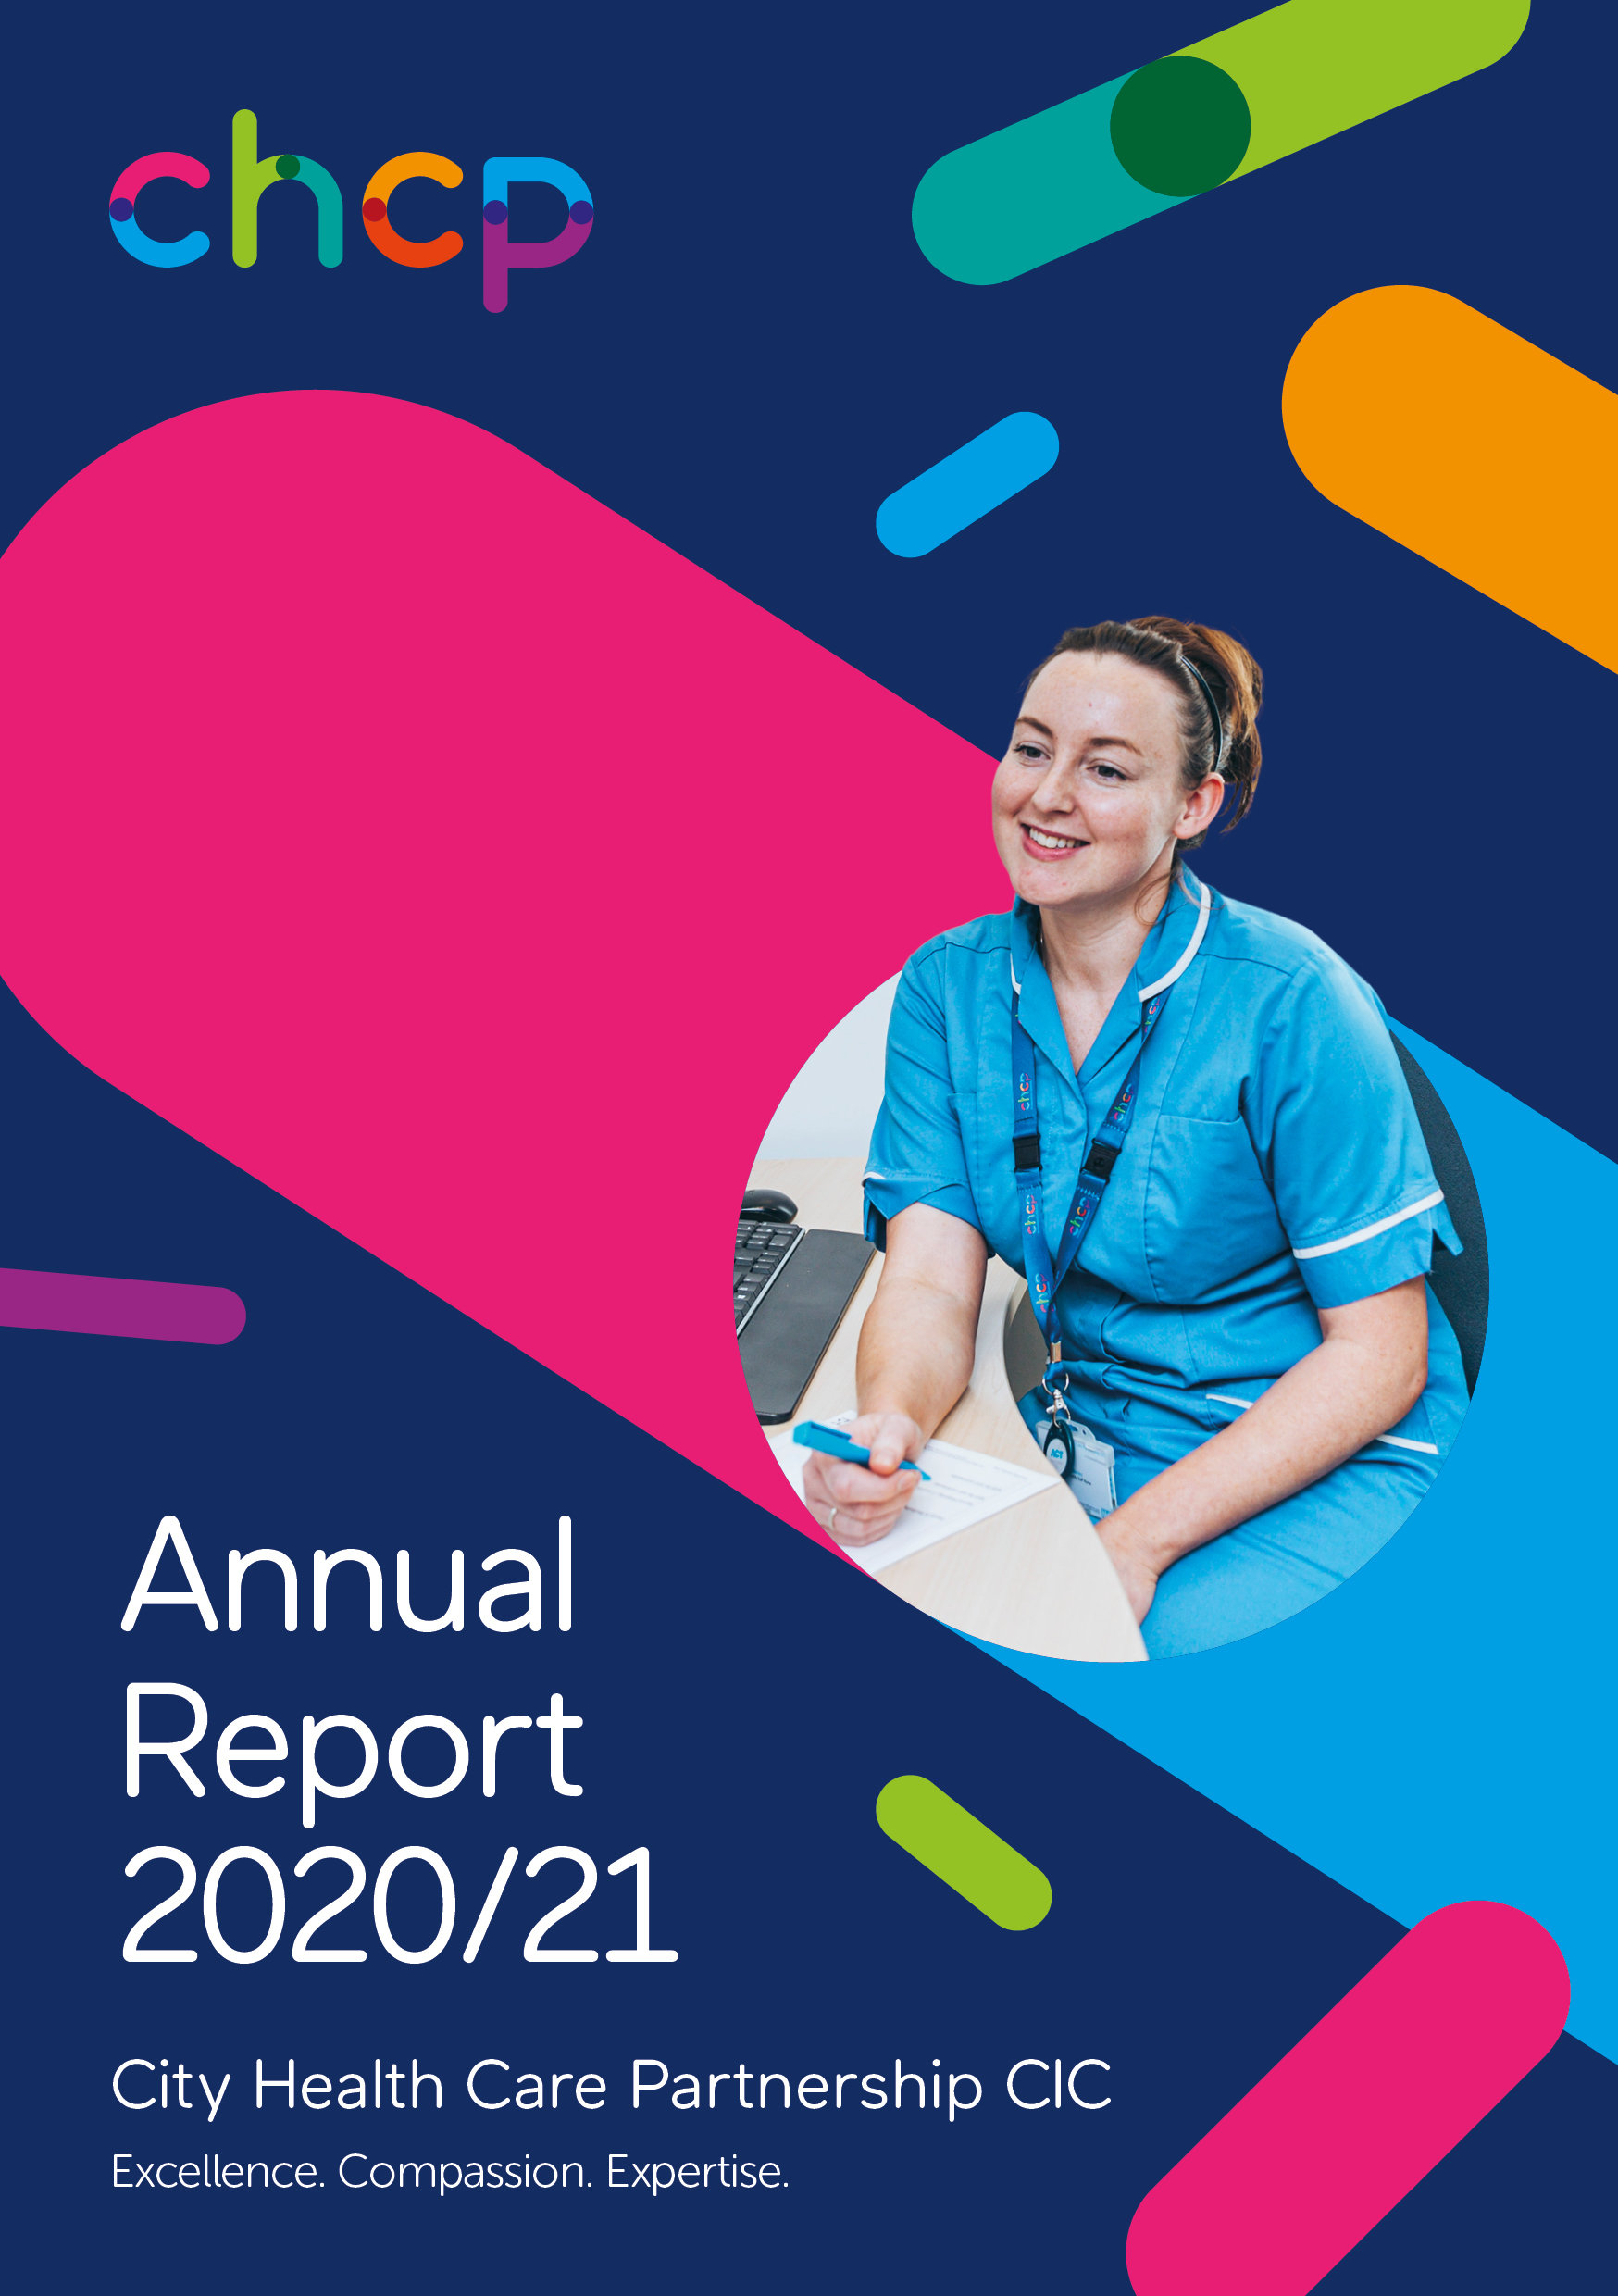 Annual report 2020/21